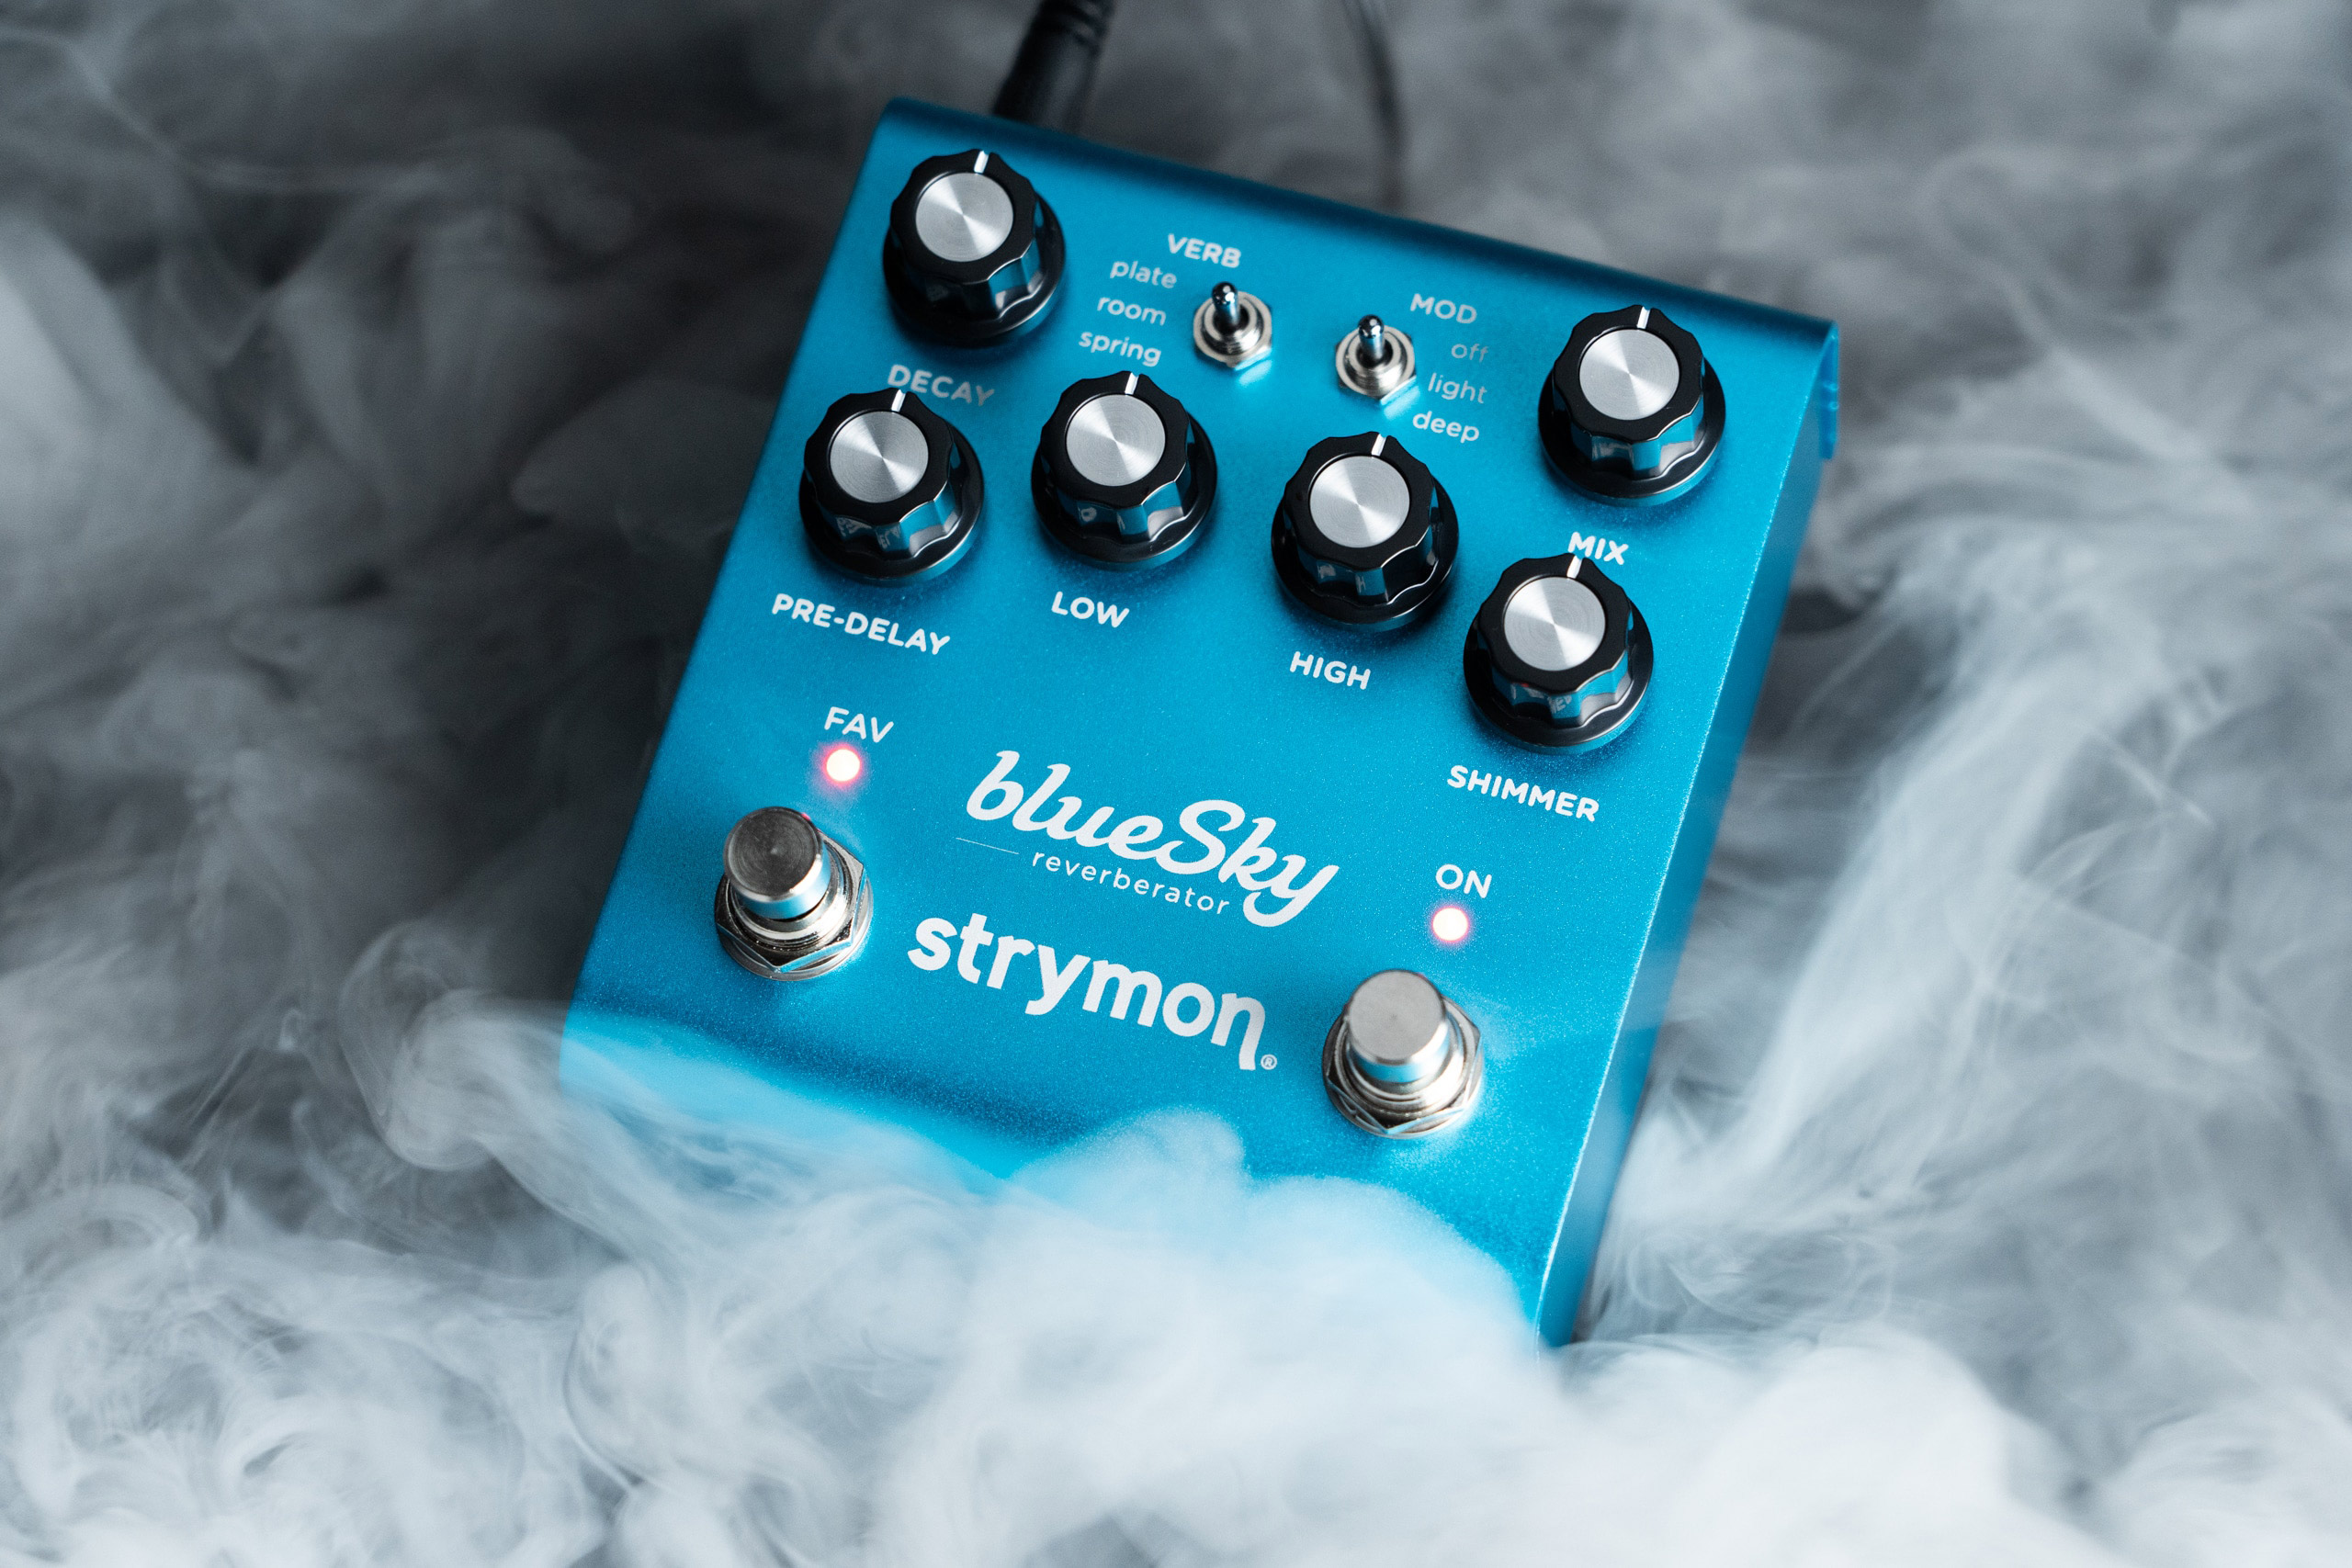 strymon | blueSky（V2） | リバーブ | 製品情報